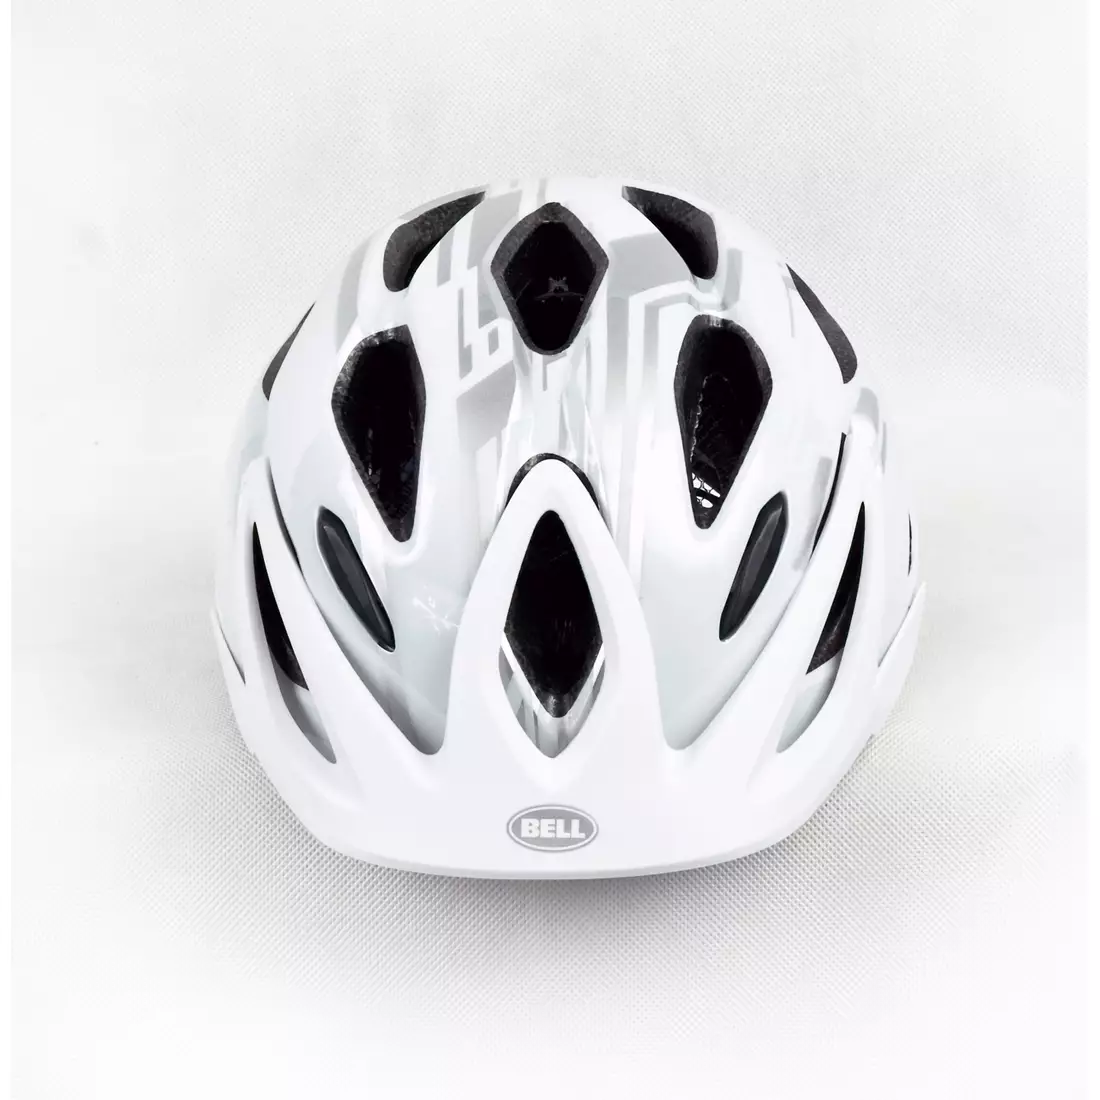 BELL INDY - cyklistická přilba, bílá a stříbrná